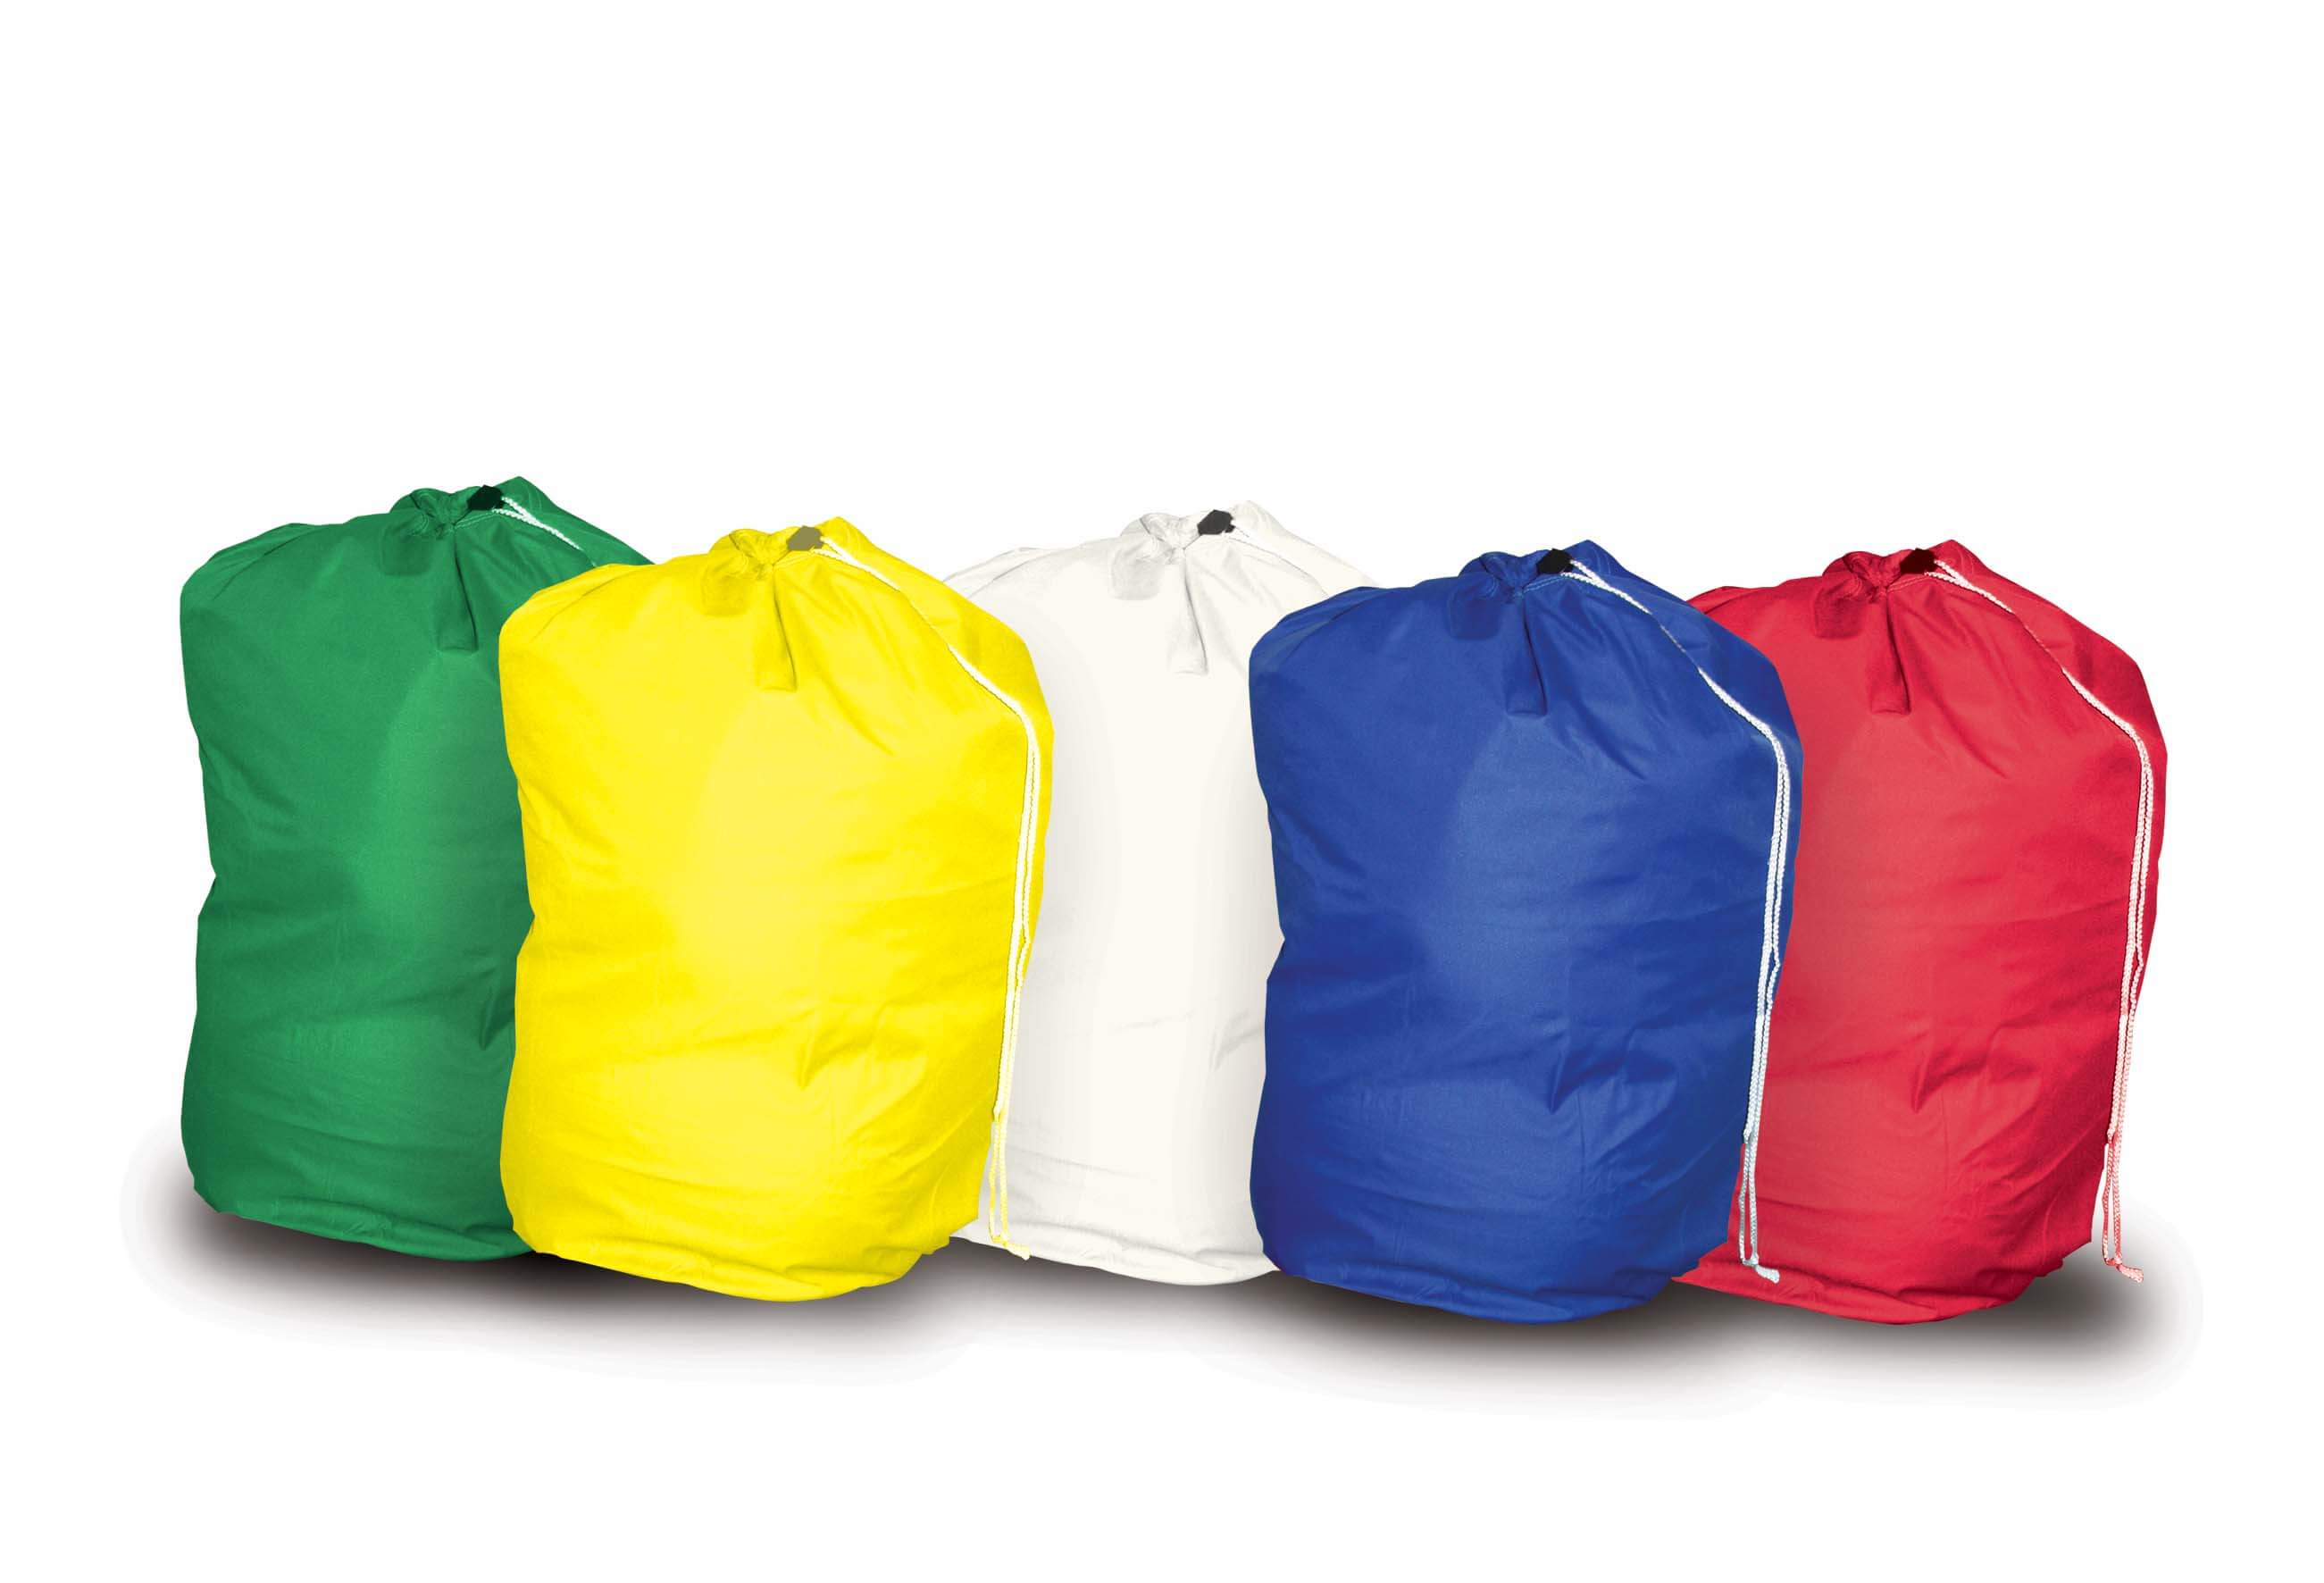 Green Linen Laundry Bag